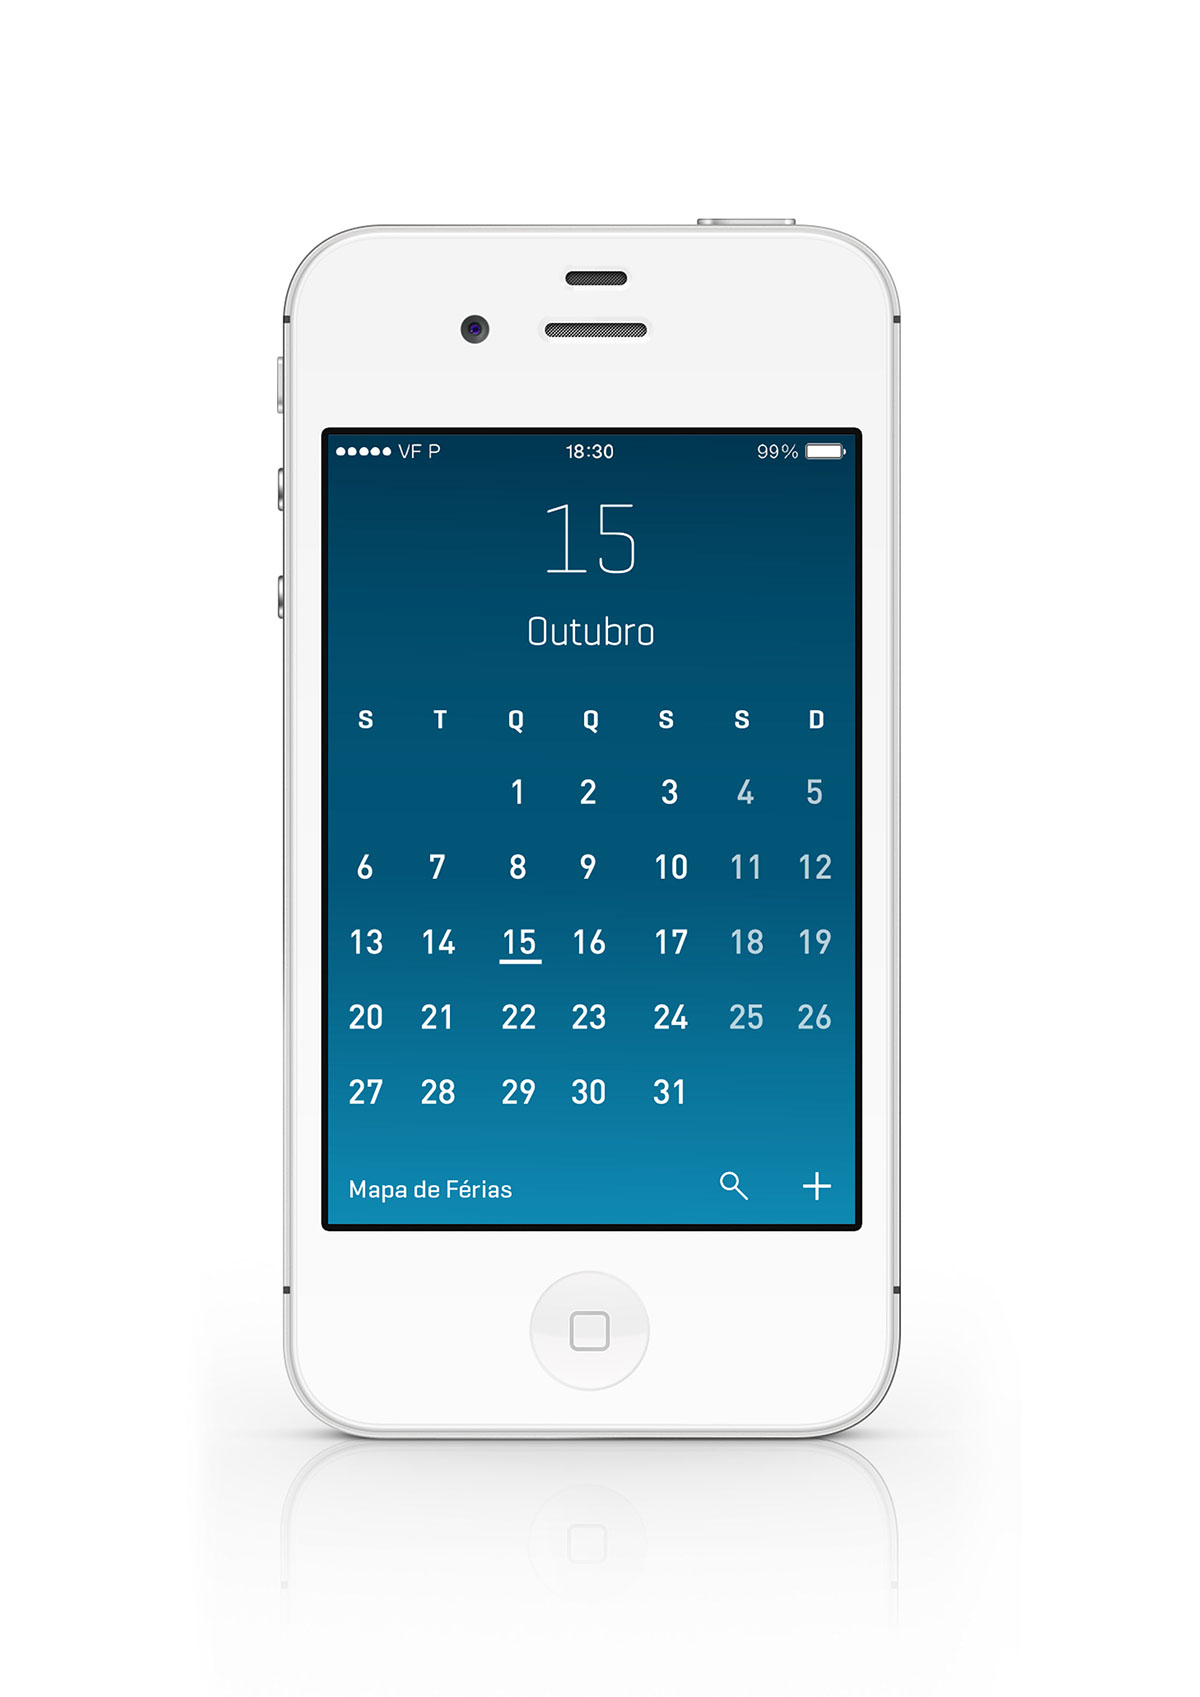 UI ux mobile apple ios app iphone user Interface Experience calendar vacation